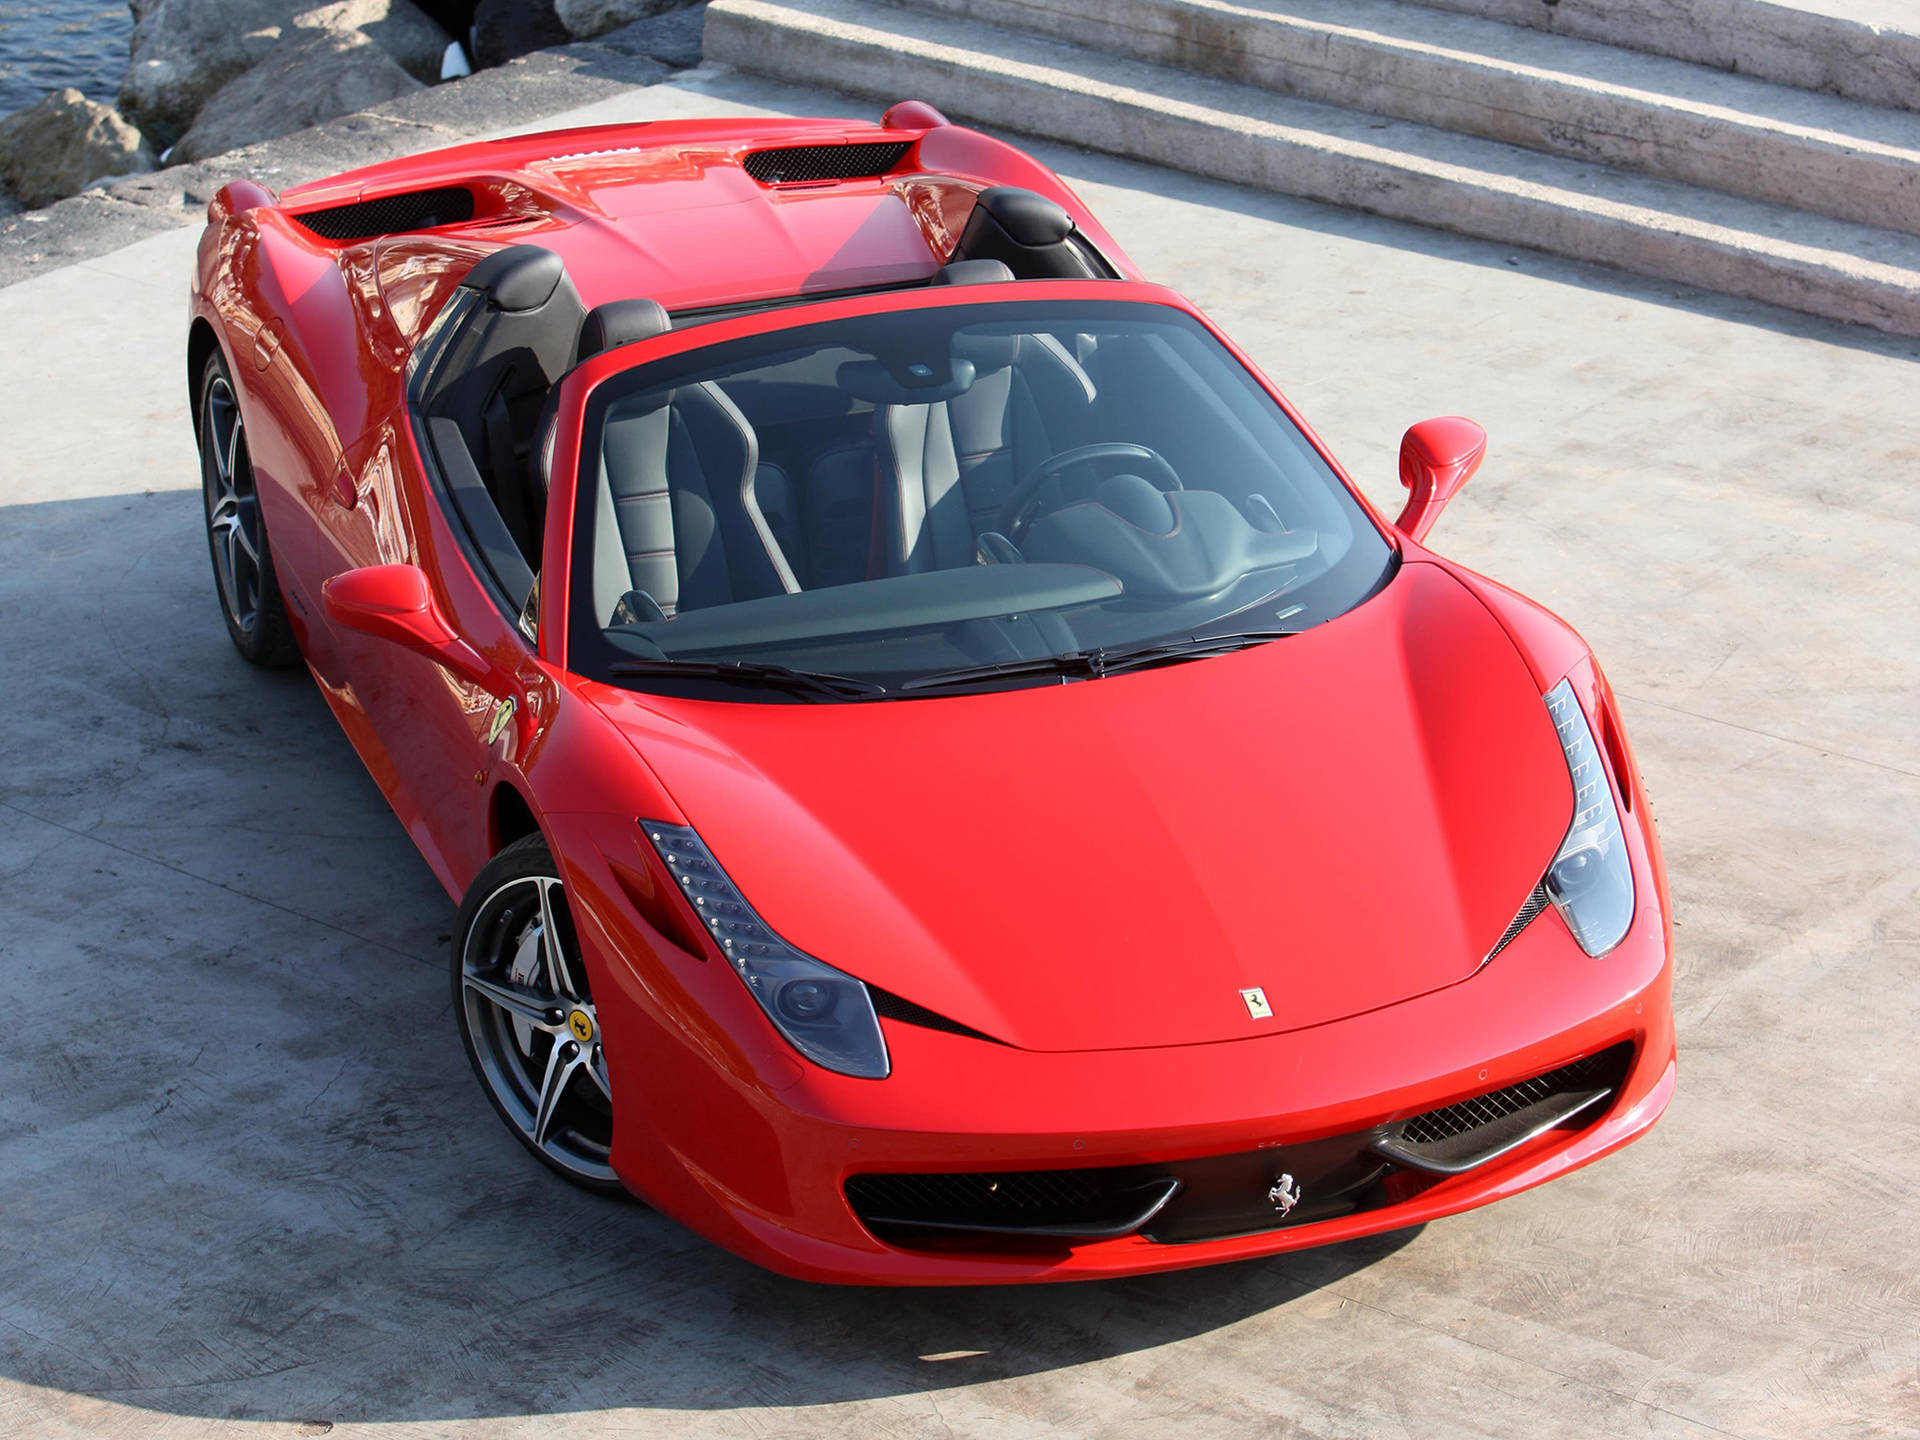 4k Ferrari Red Luxury Car Background